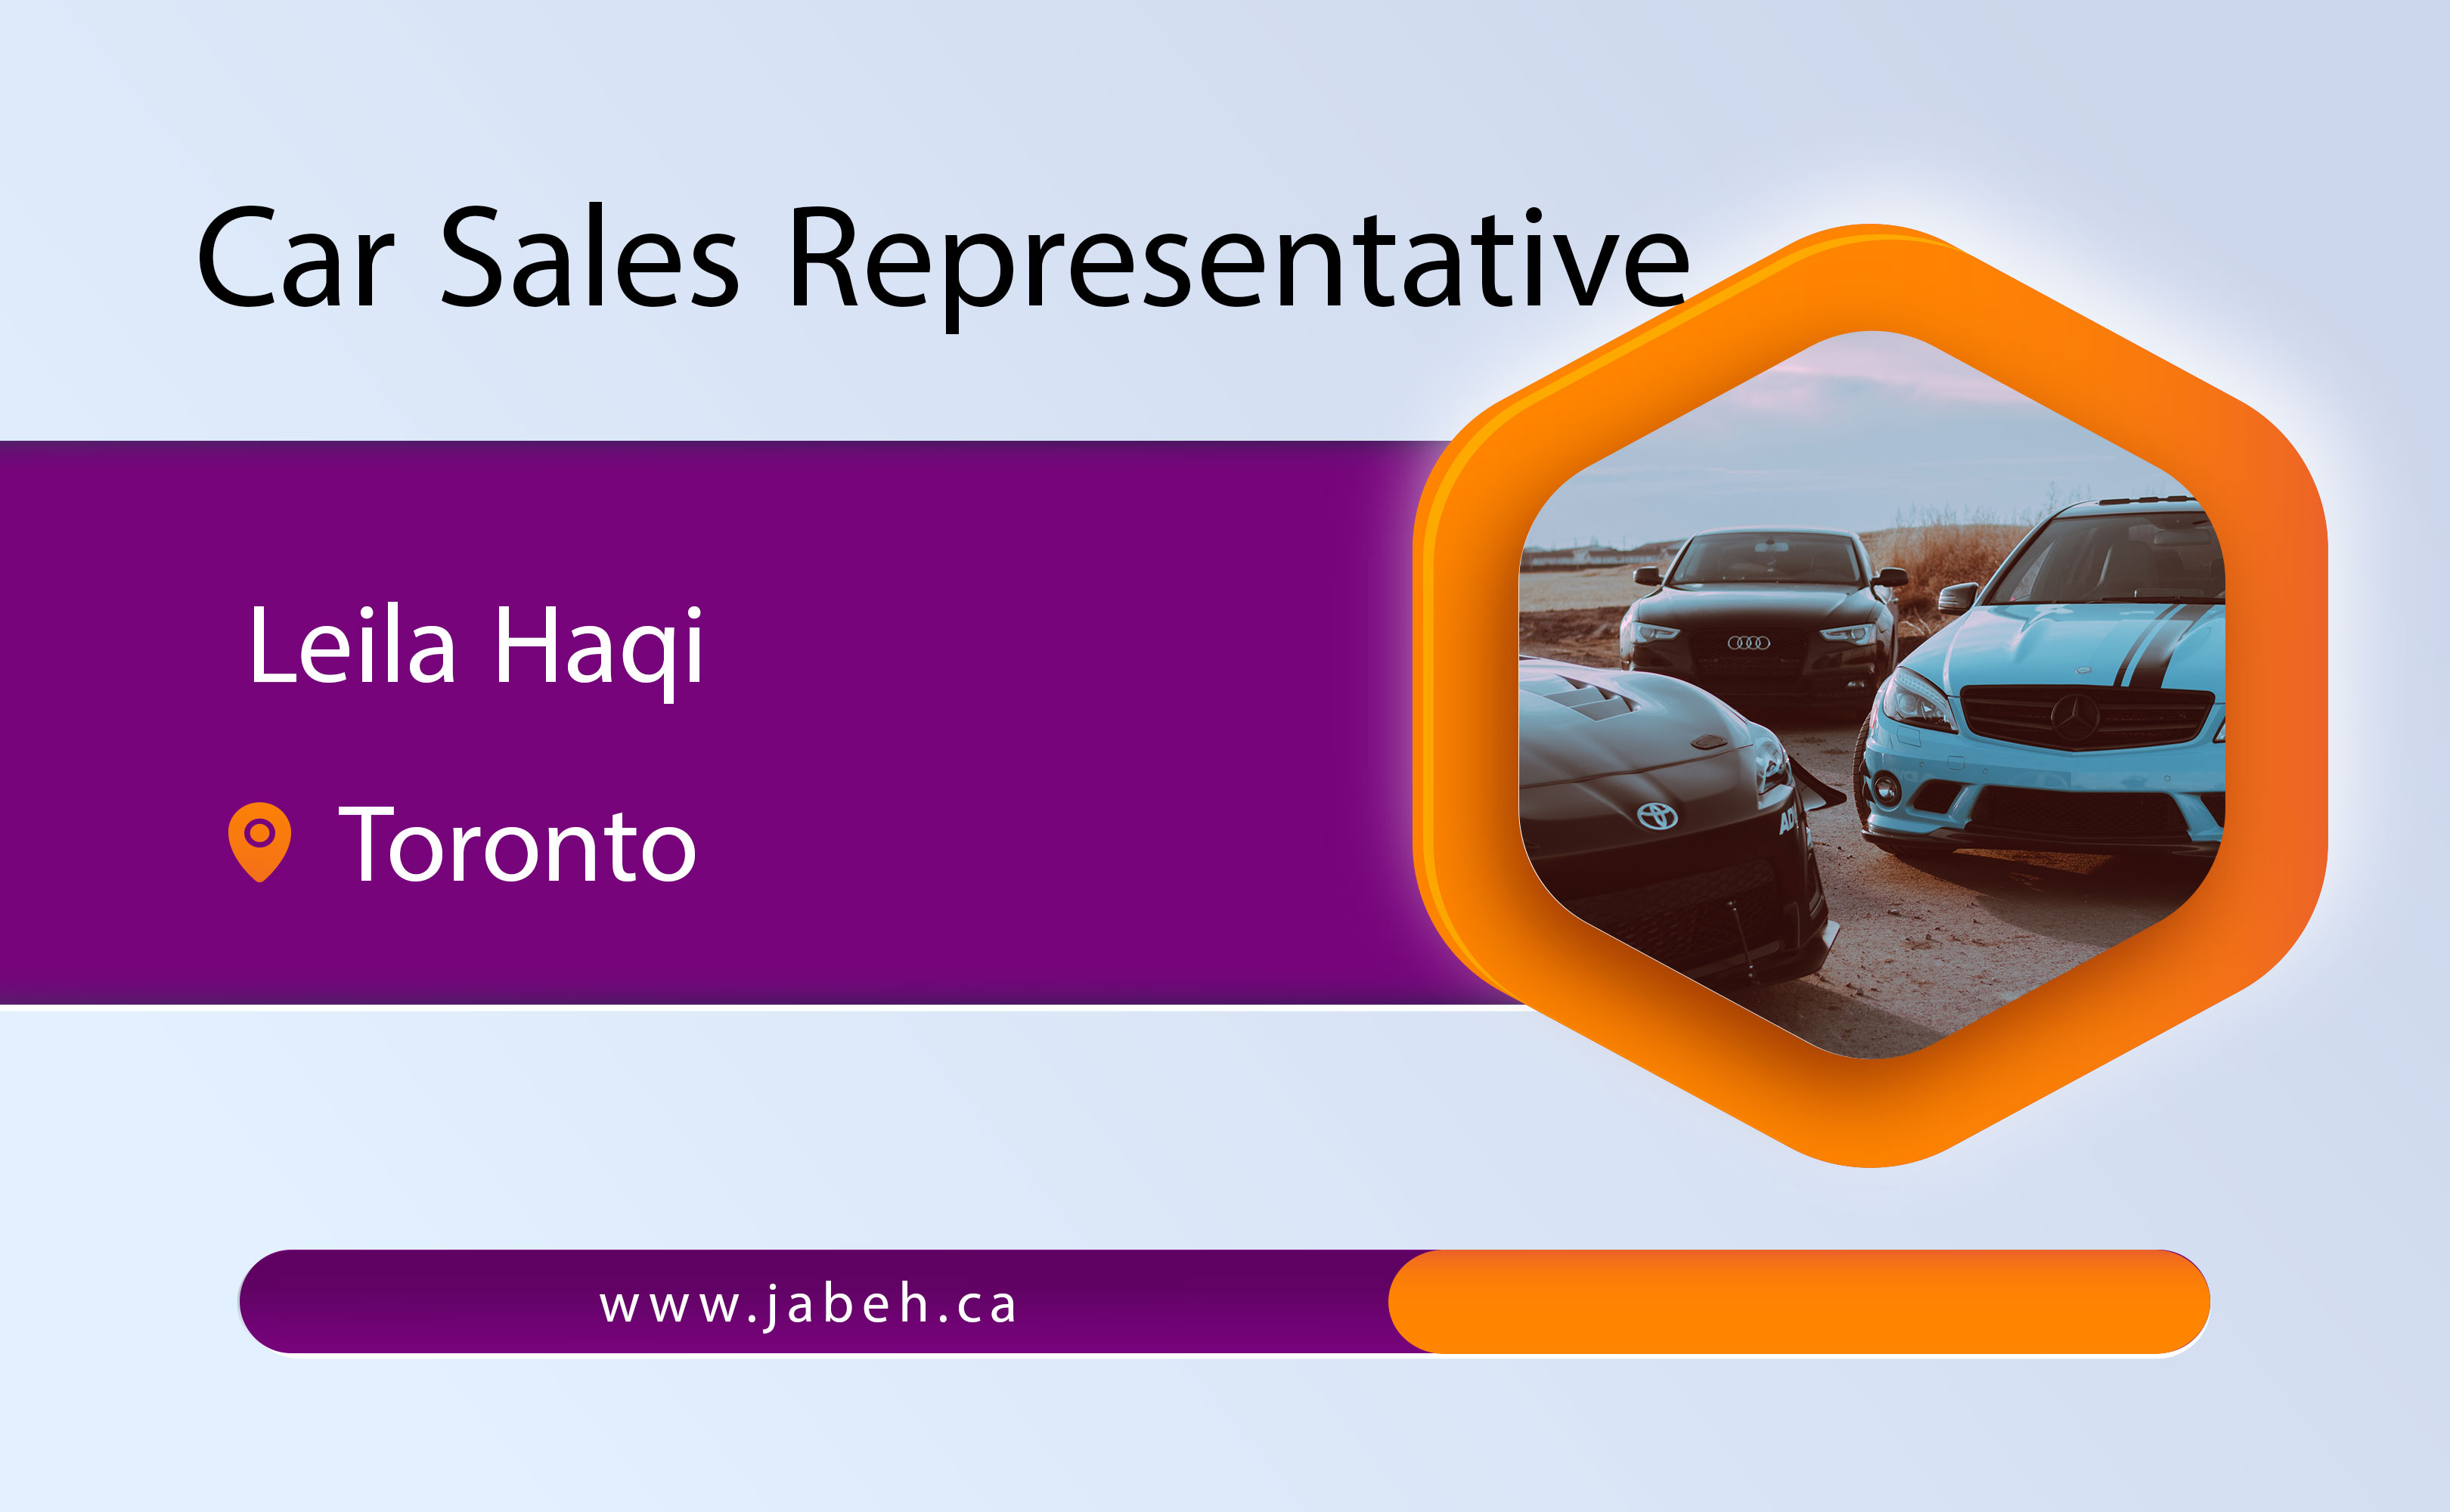 Iranian car sales representative Leila Haghi in Toronto